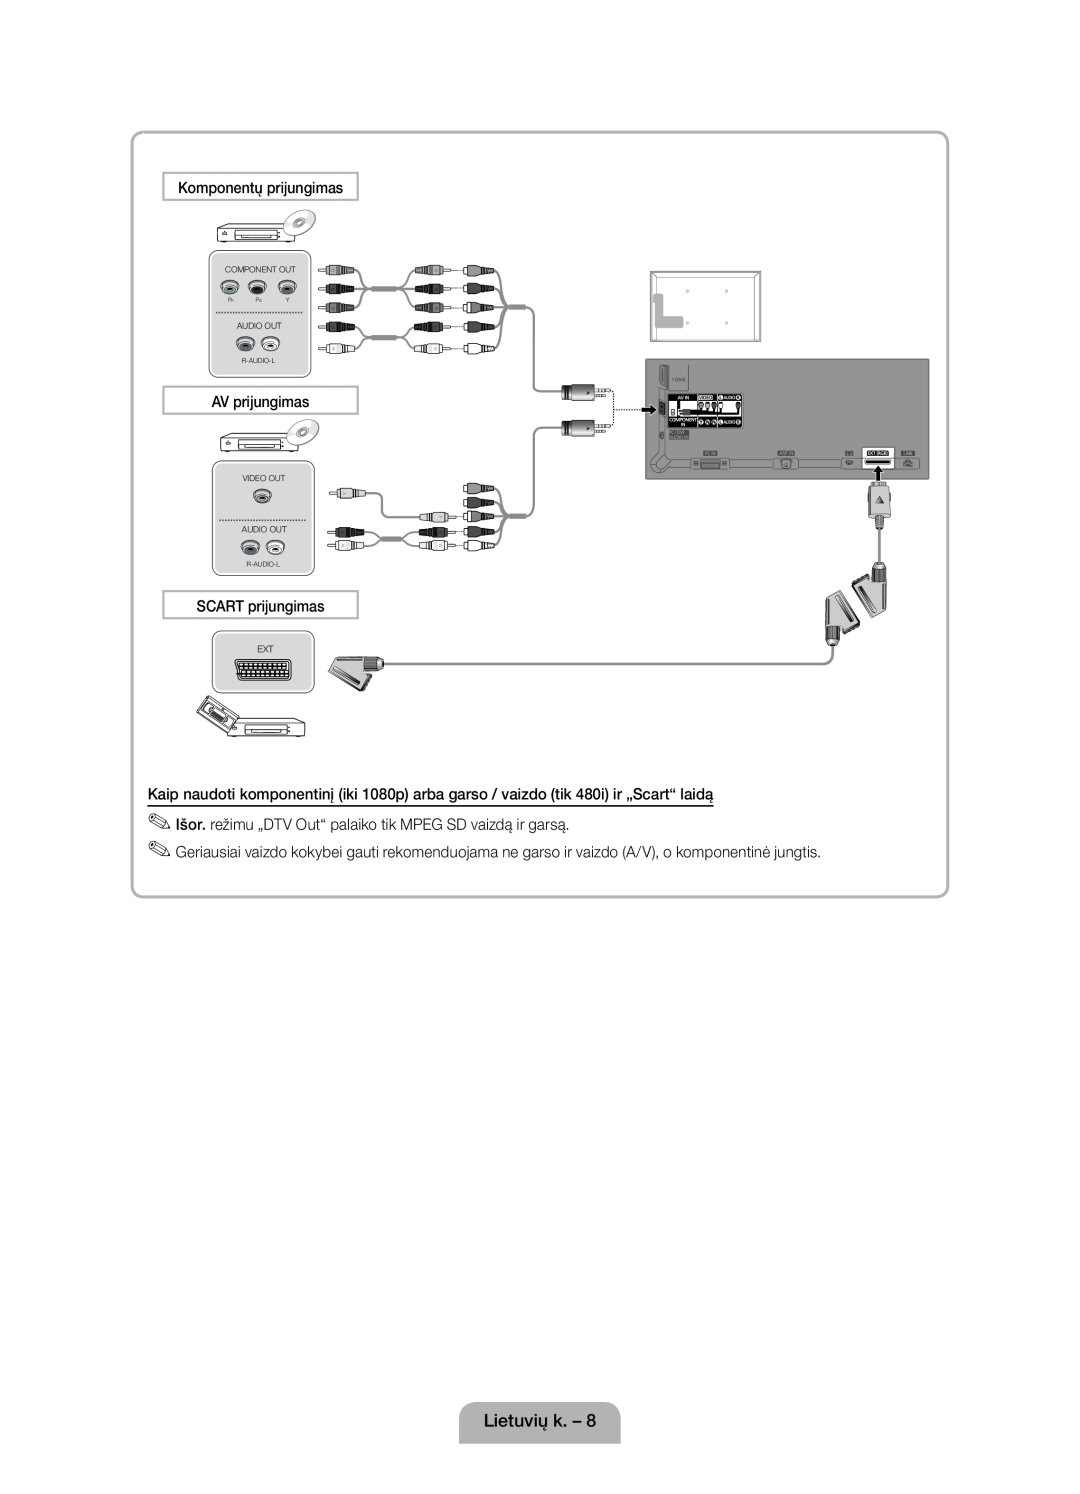 Samsung UE32D5000PWXZT Lietuvių k, Komponentų prijungimas, AV prijungimas, SCART prijungimas, Component Out, Audio Out 